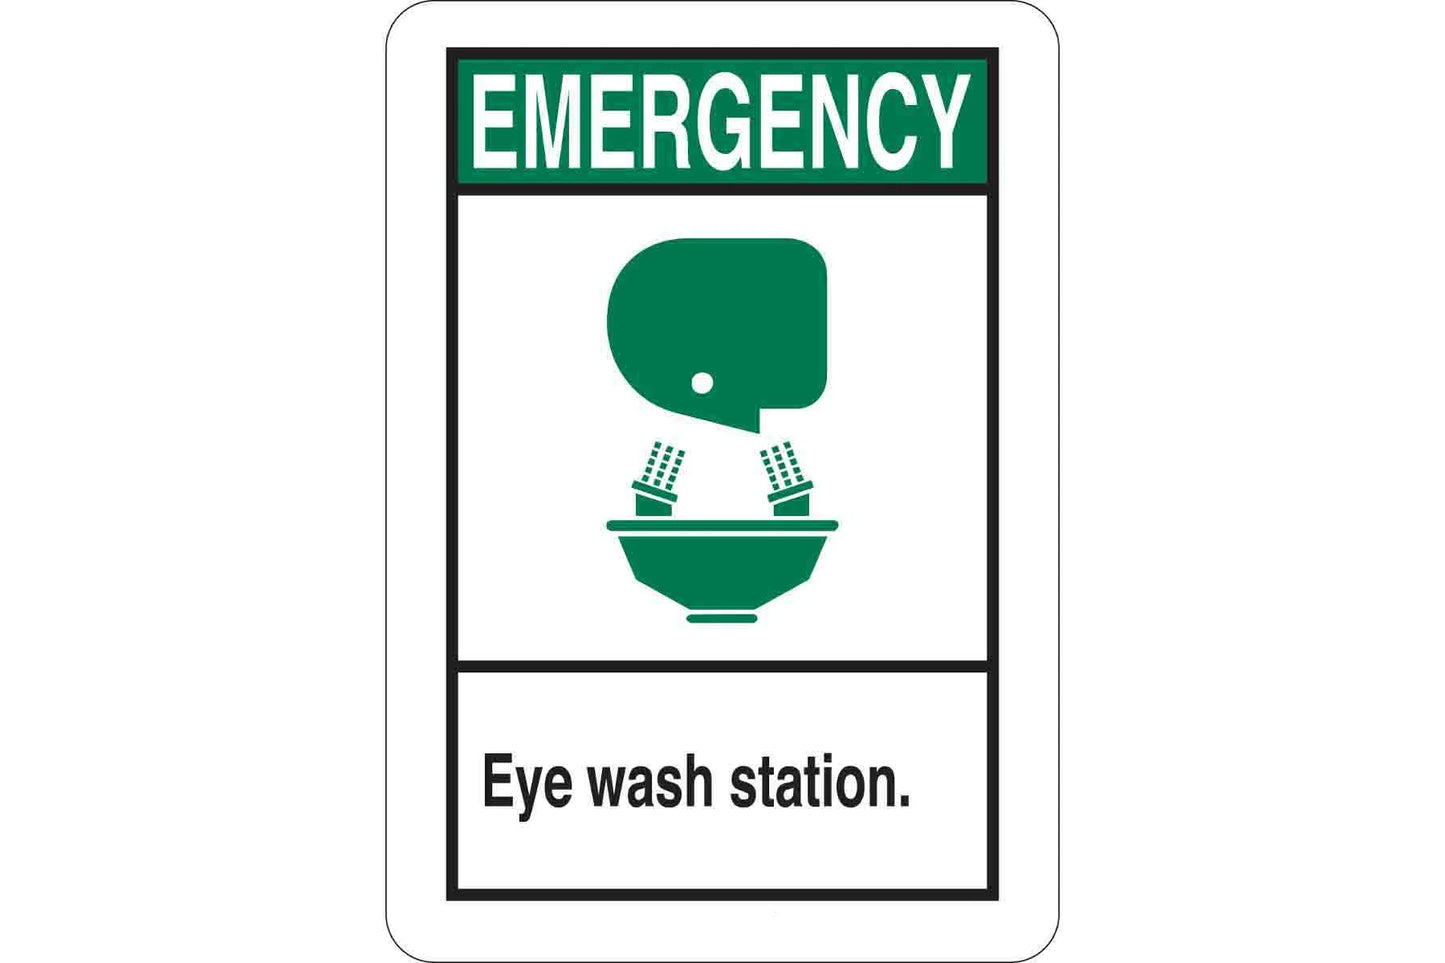 EMERGENCY Eye Wash Station. Sign